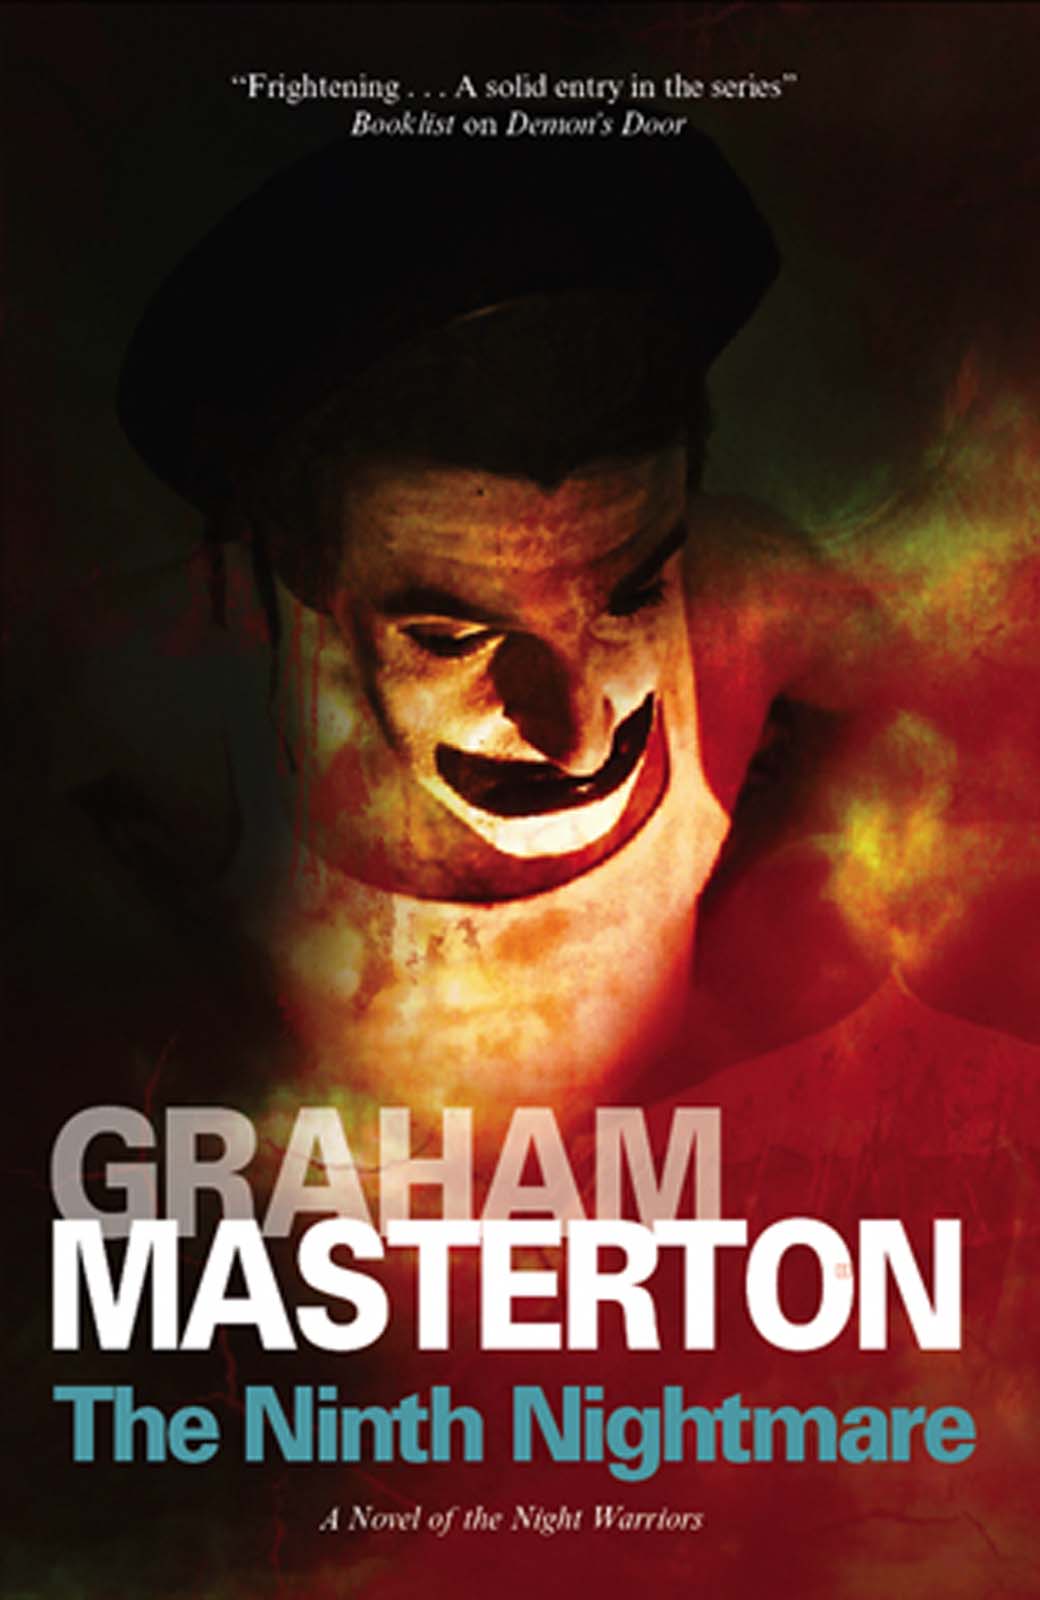 The Ninth Nightmare by Graham Masterton